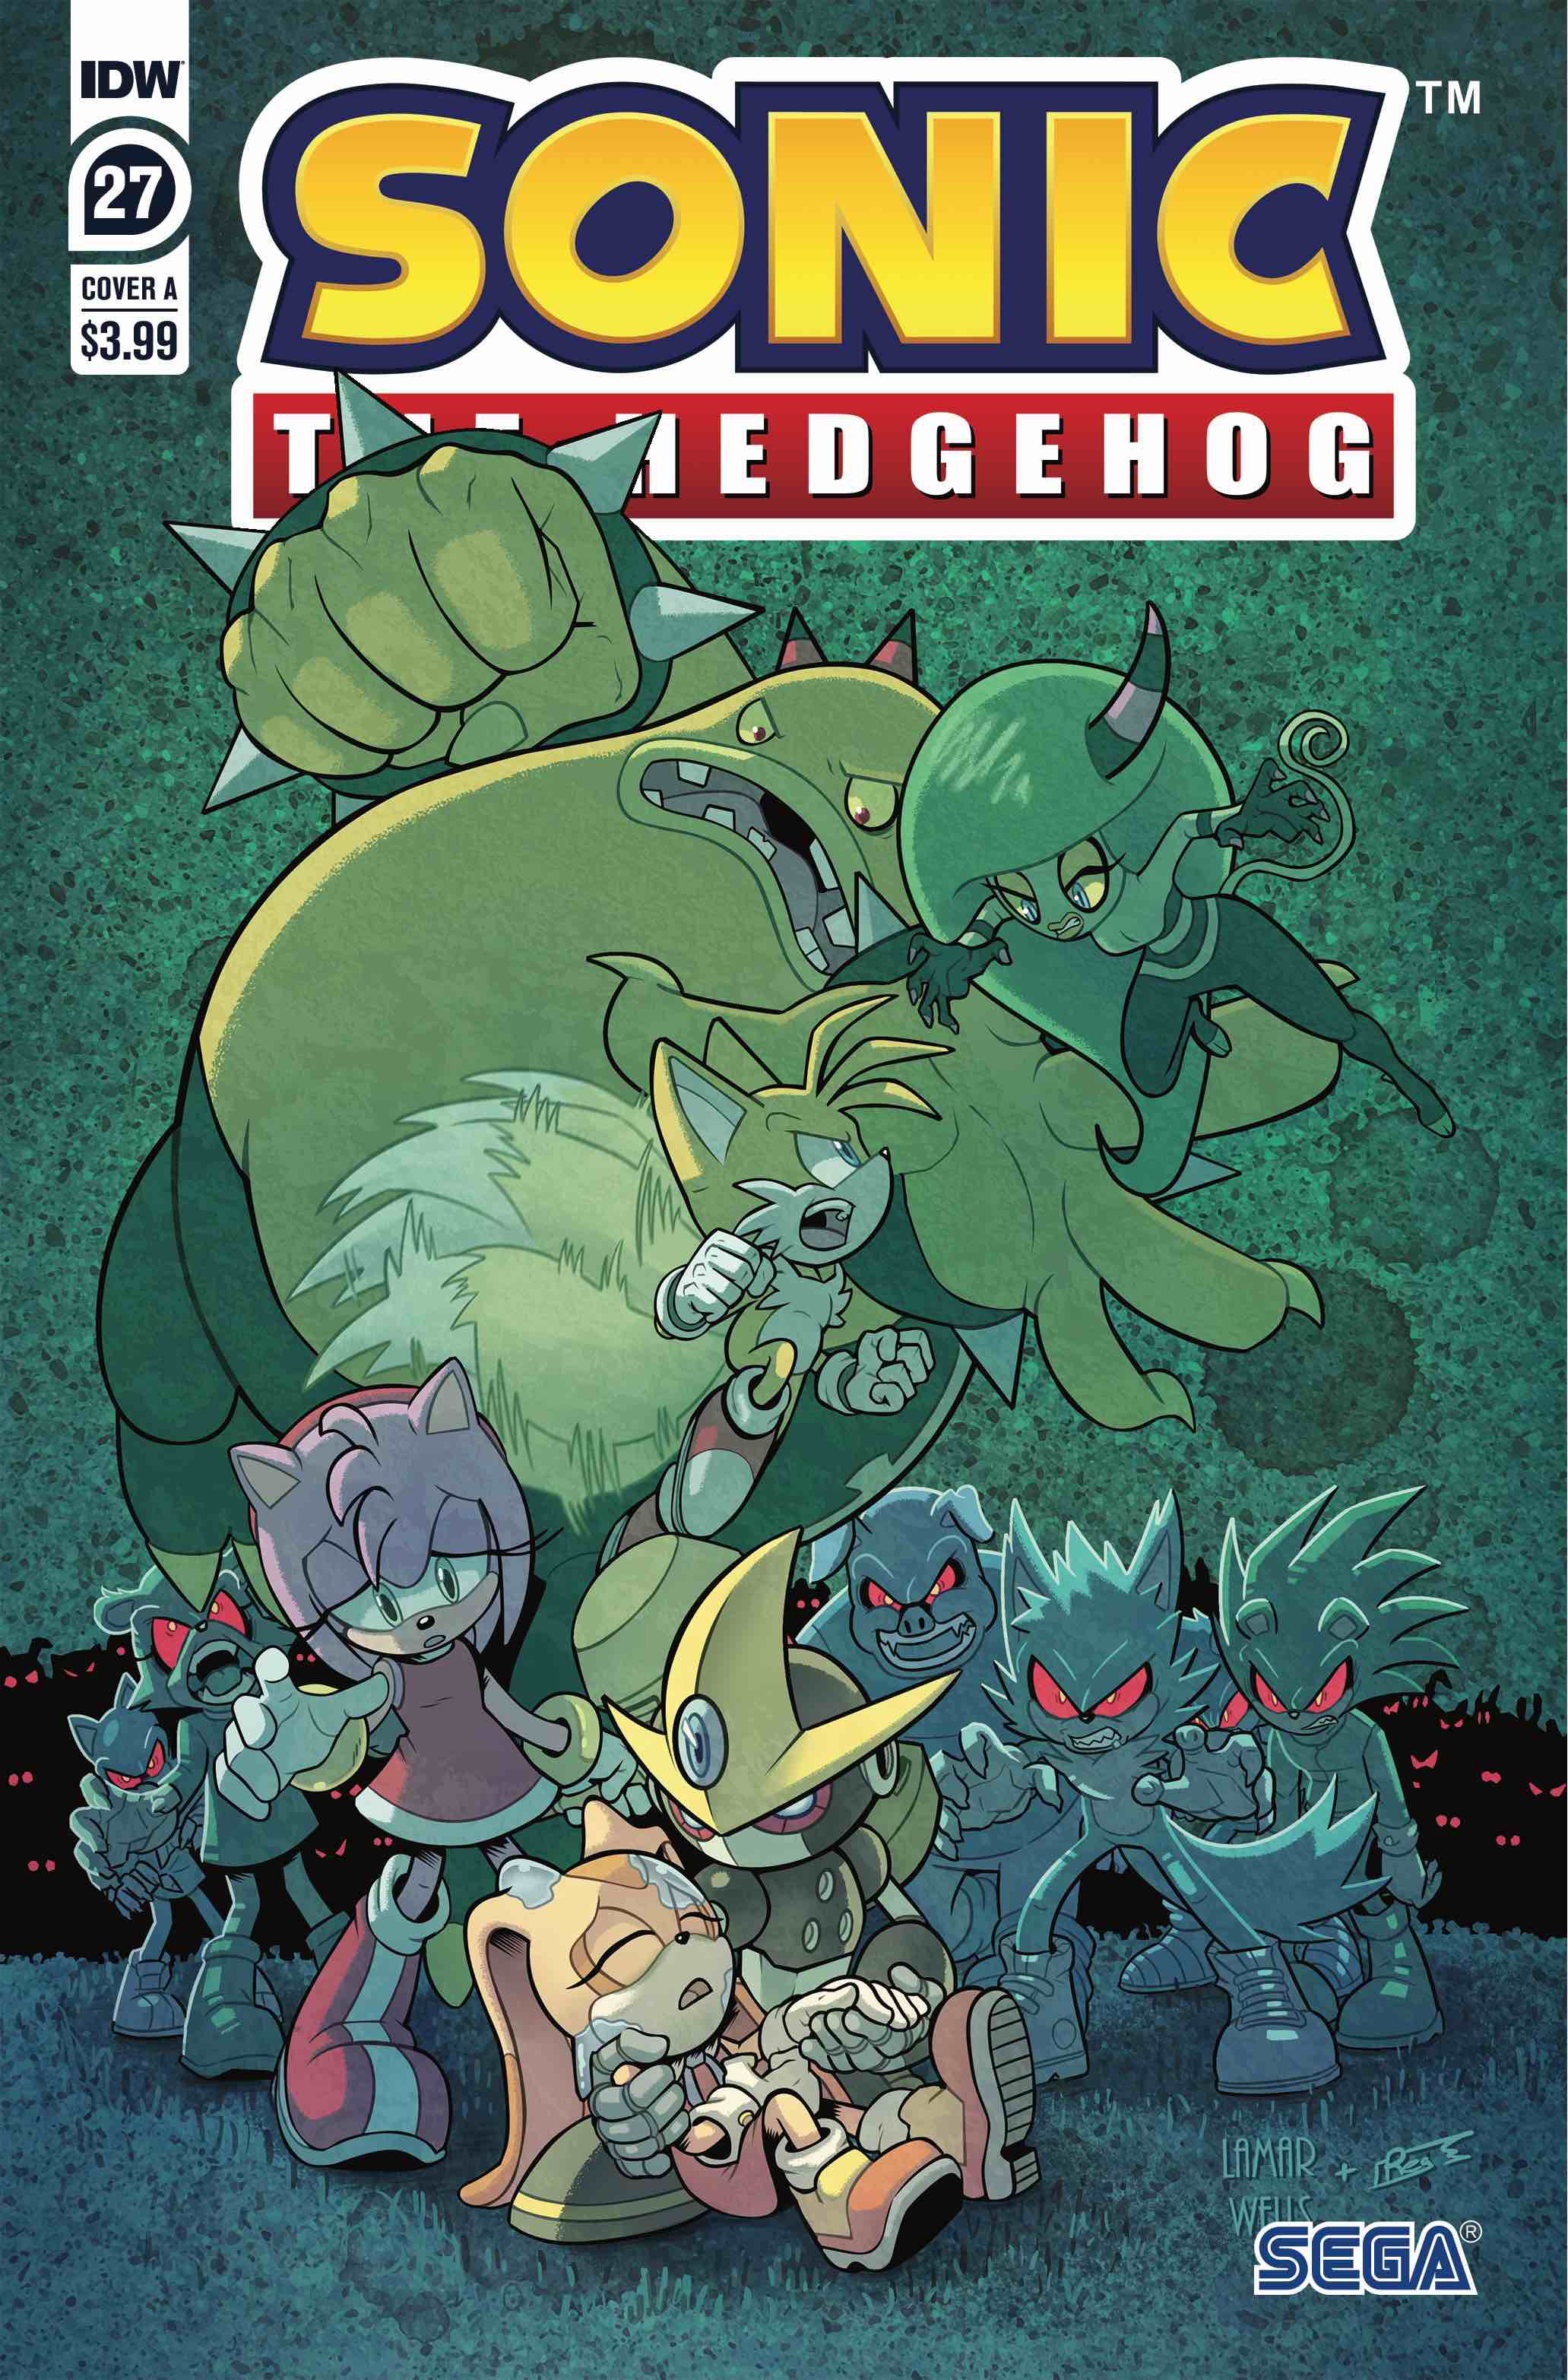 Sonic The Hedgehog #27 Comic